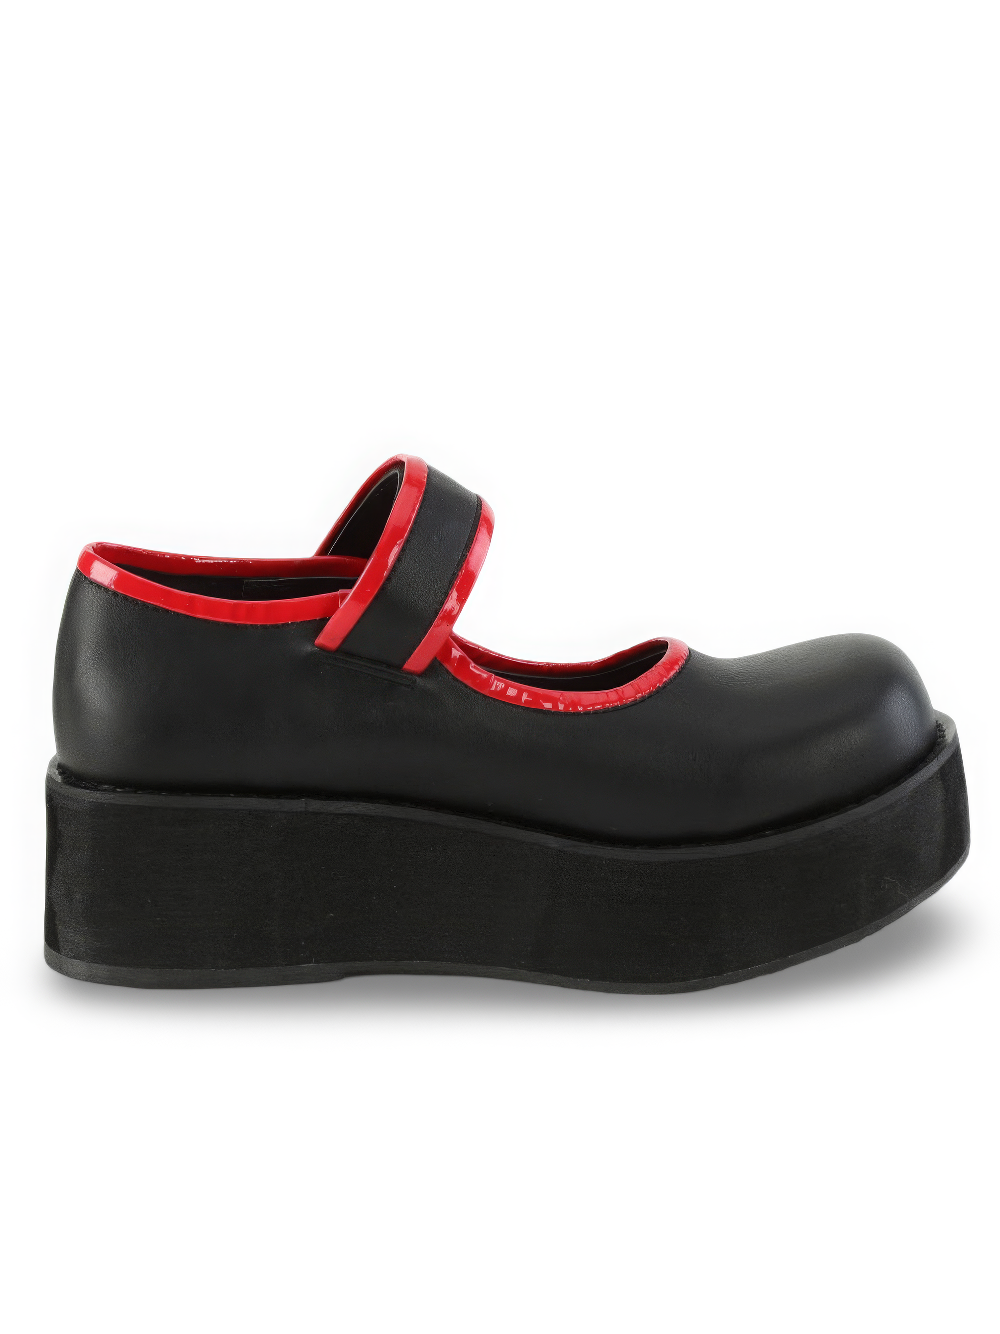 DEMONIA Black Contrast Piped Mary Jane Platform Shoes